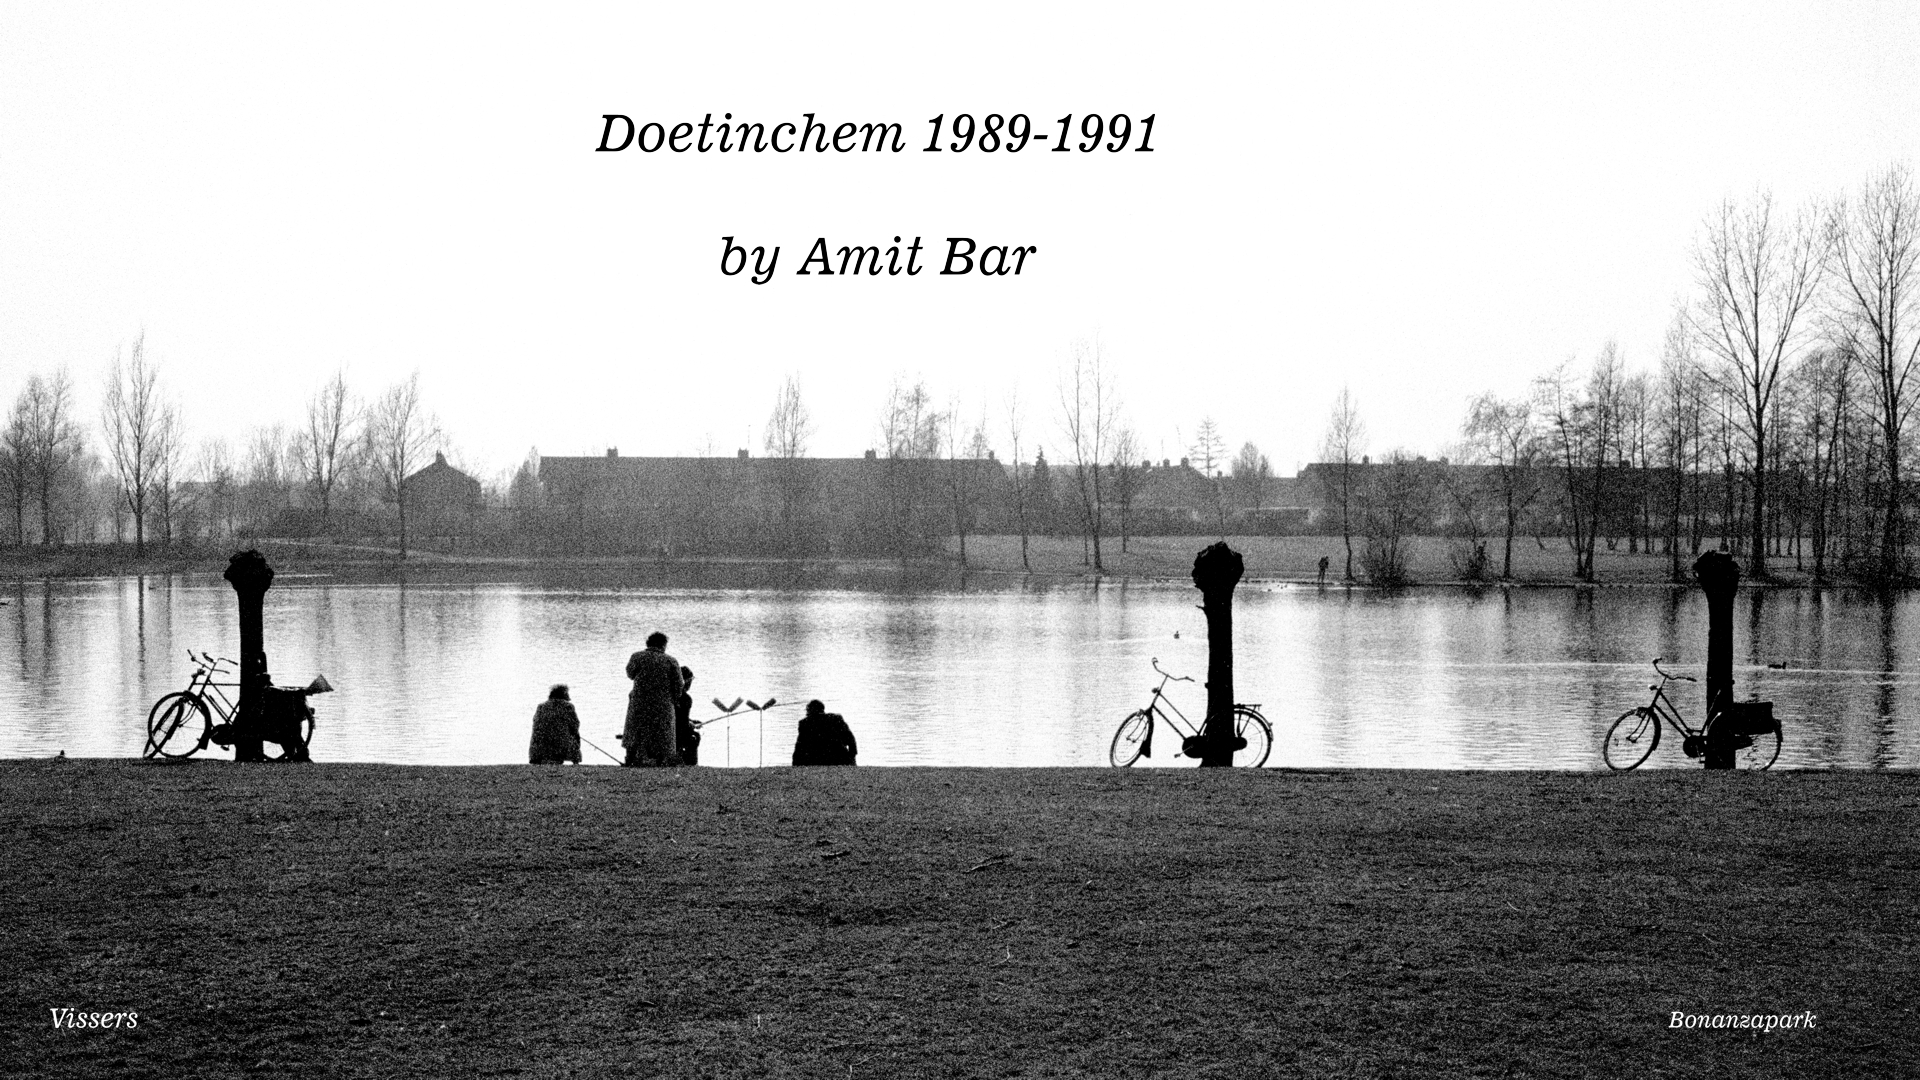 Old Doetinchem 1989-1991